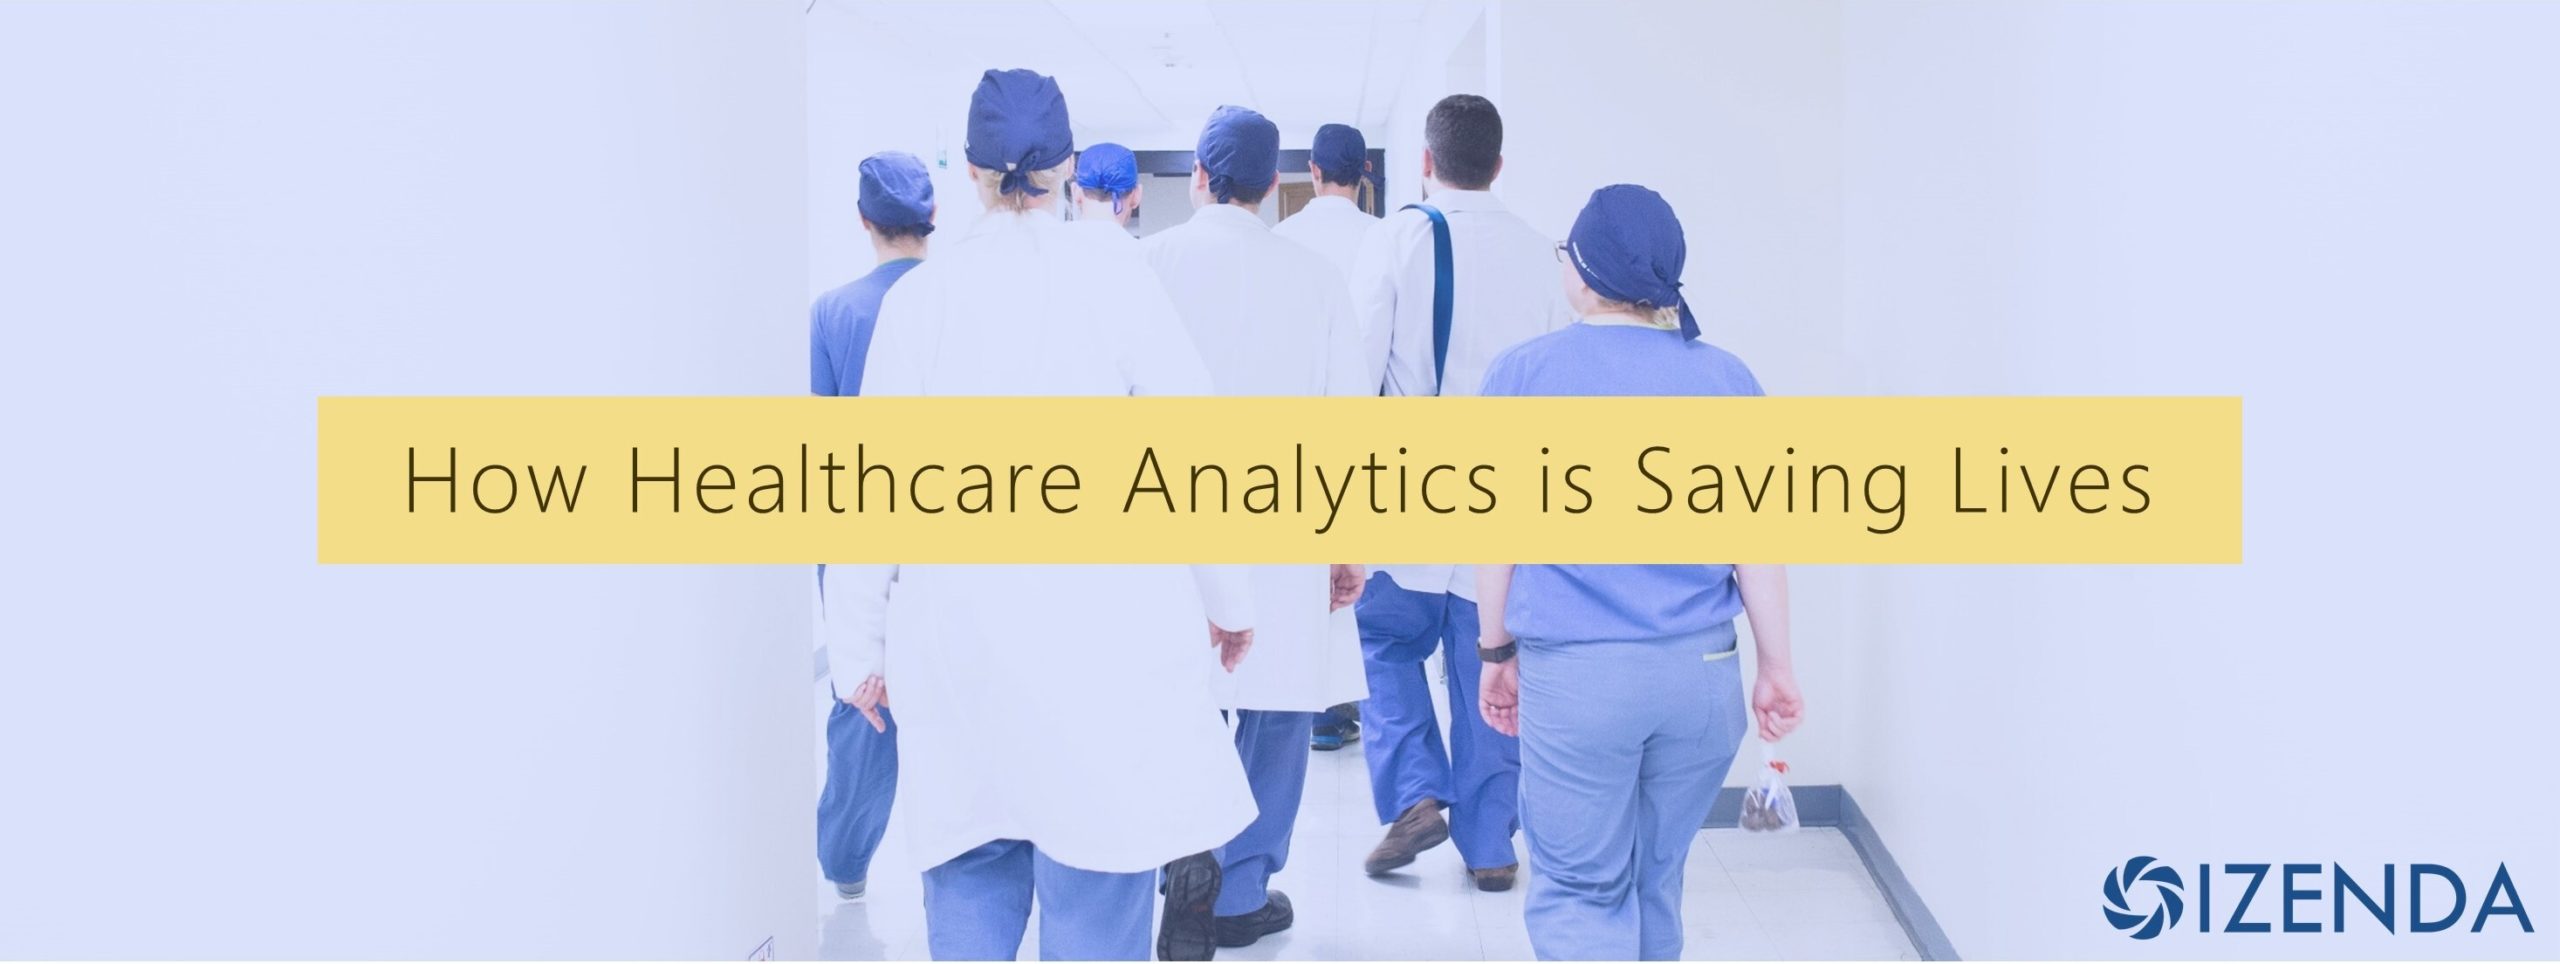 healthcare analytics saves lives